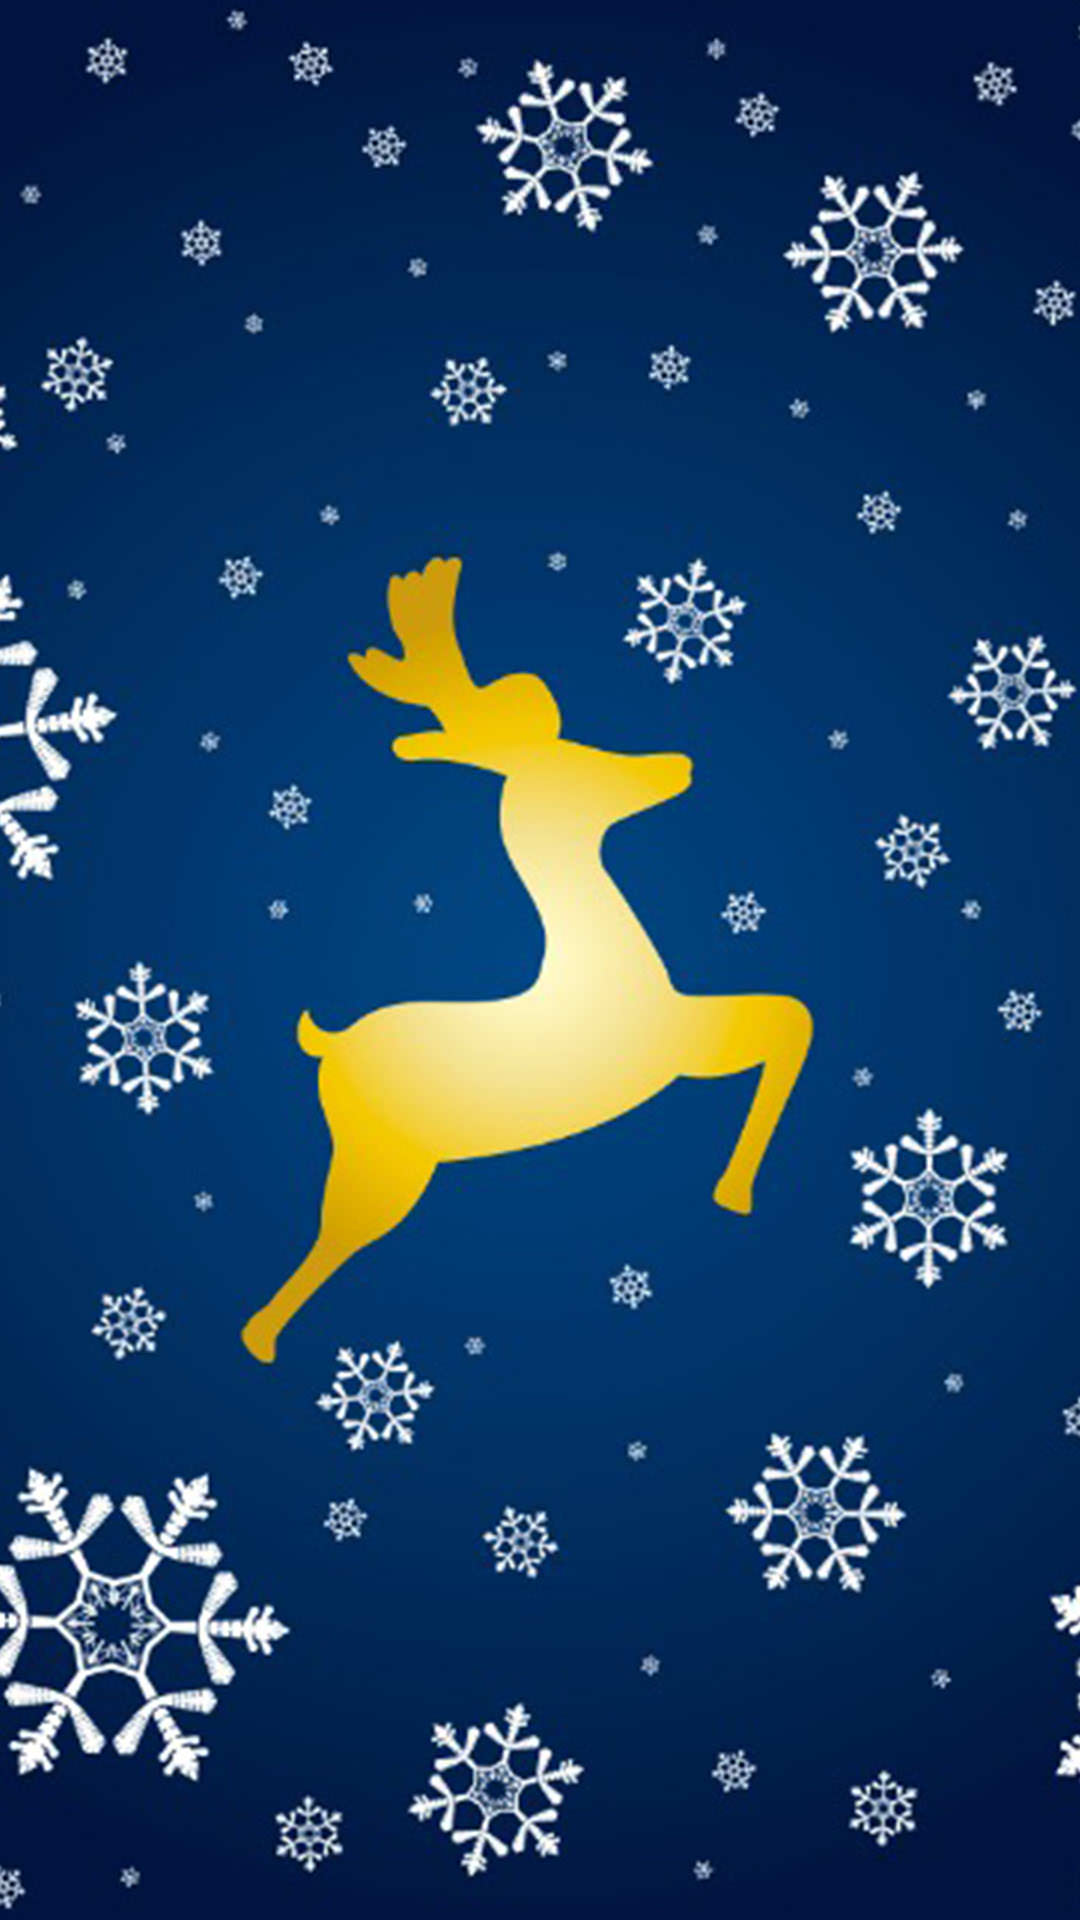 Christmas Deer Mobile Wallpaper Images Free Download on Lovepik  400385923